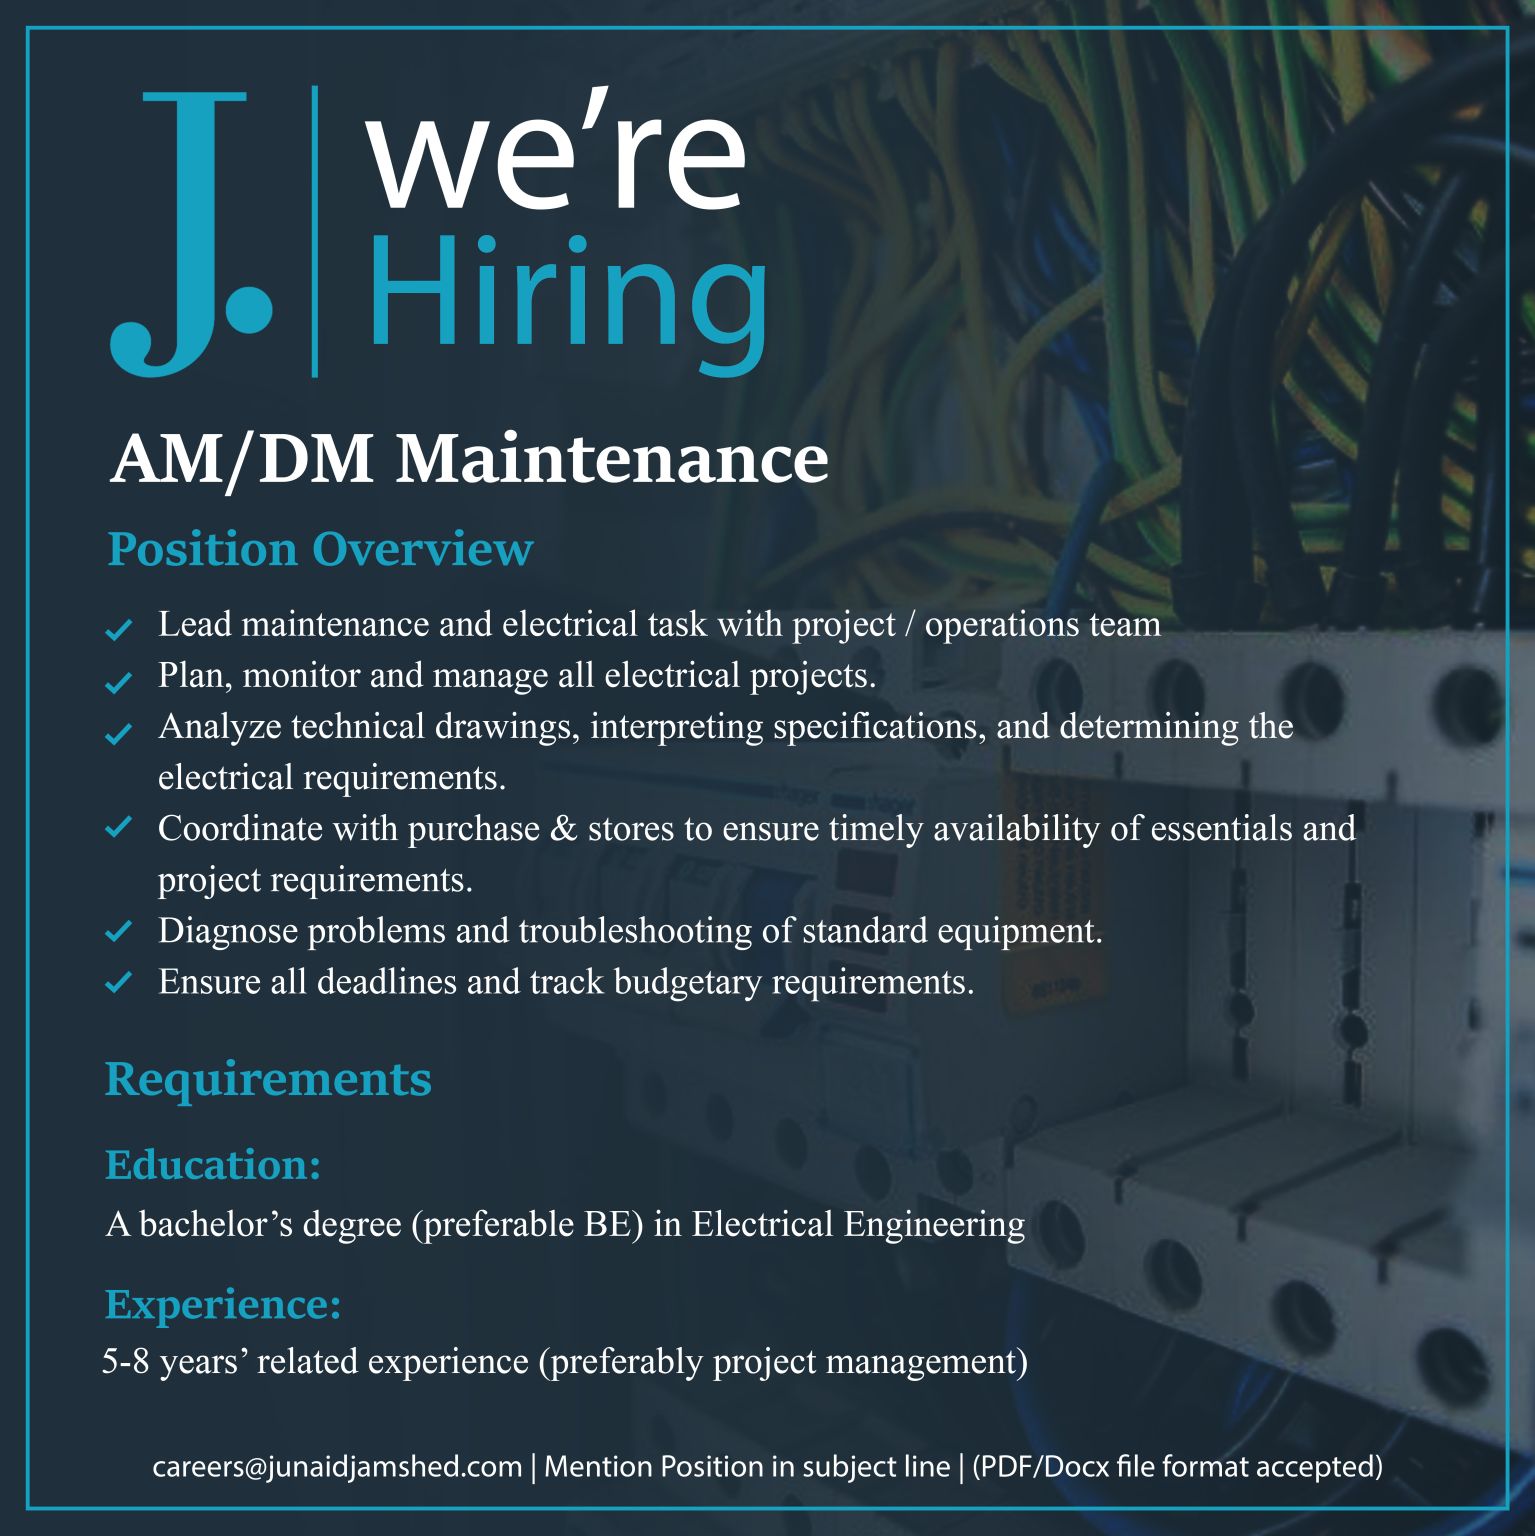 Junaid Jamshed Pvt Ltd Jobs For AM/DM Maintenance